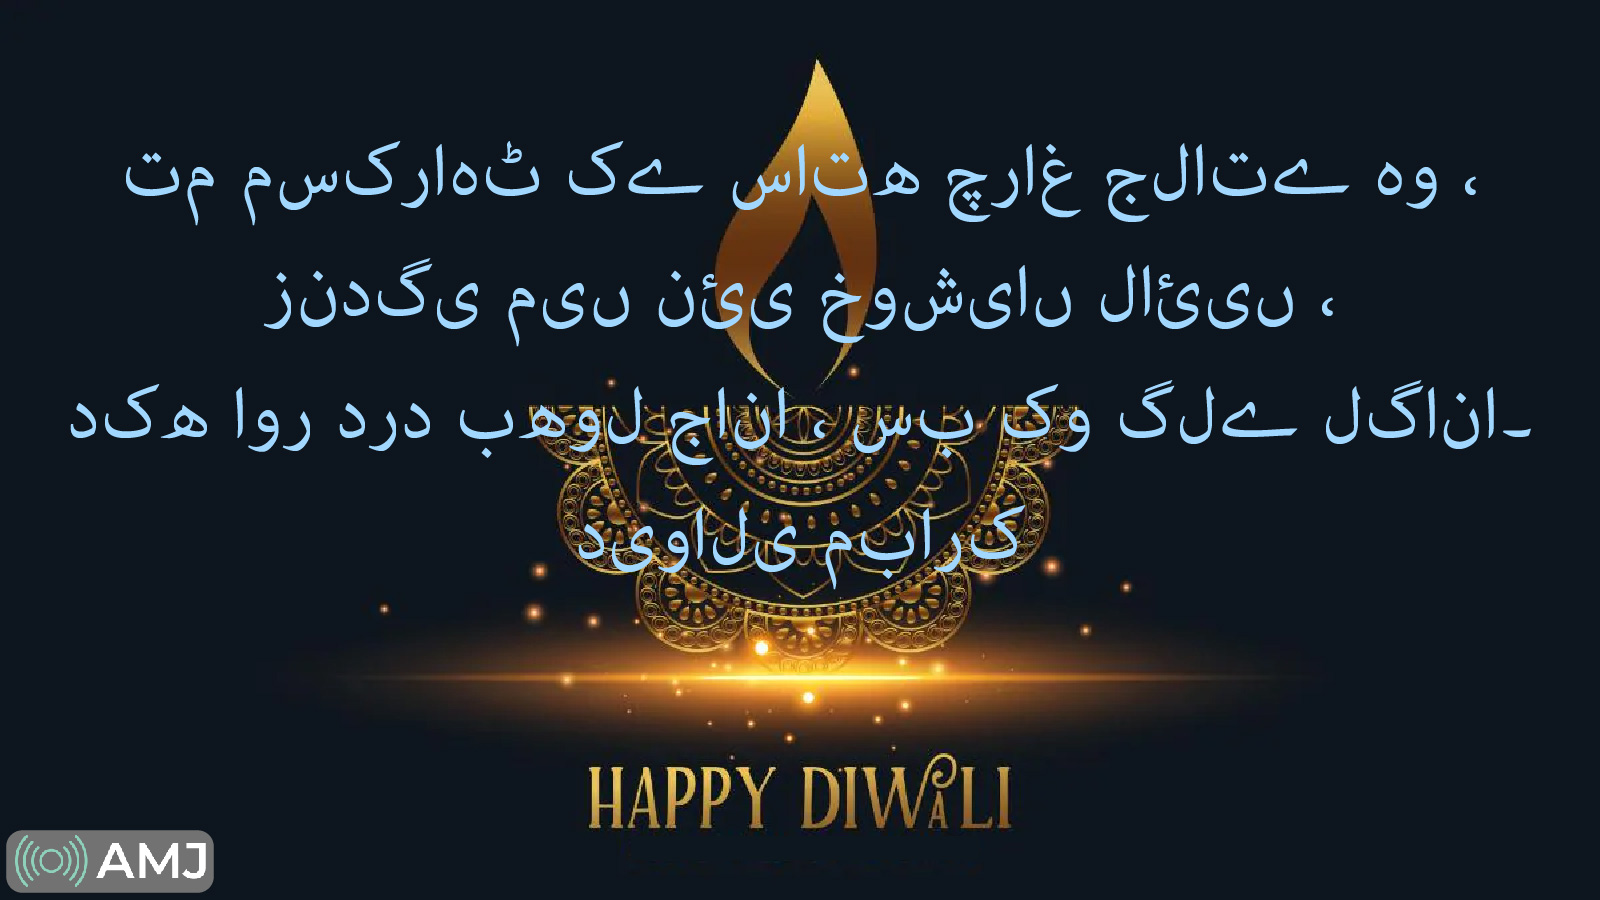 Diwali Messages in Urdu